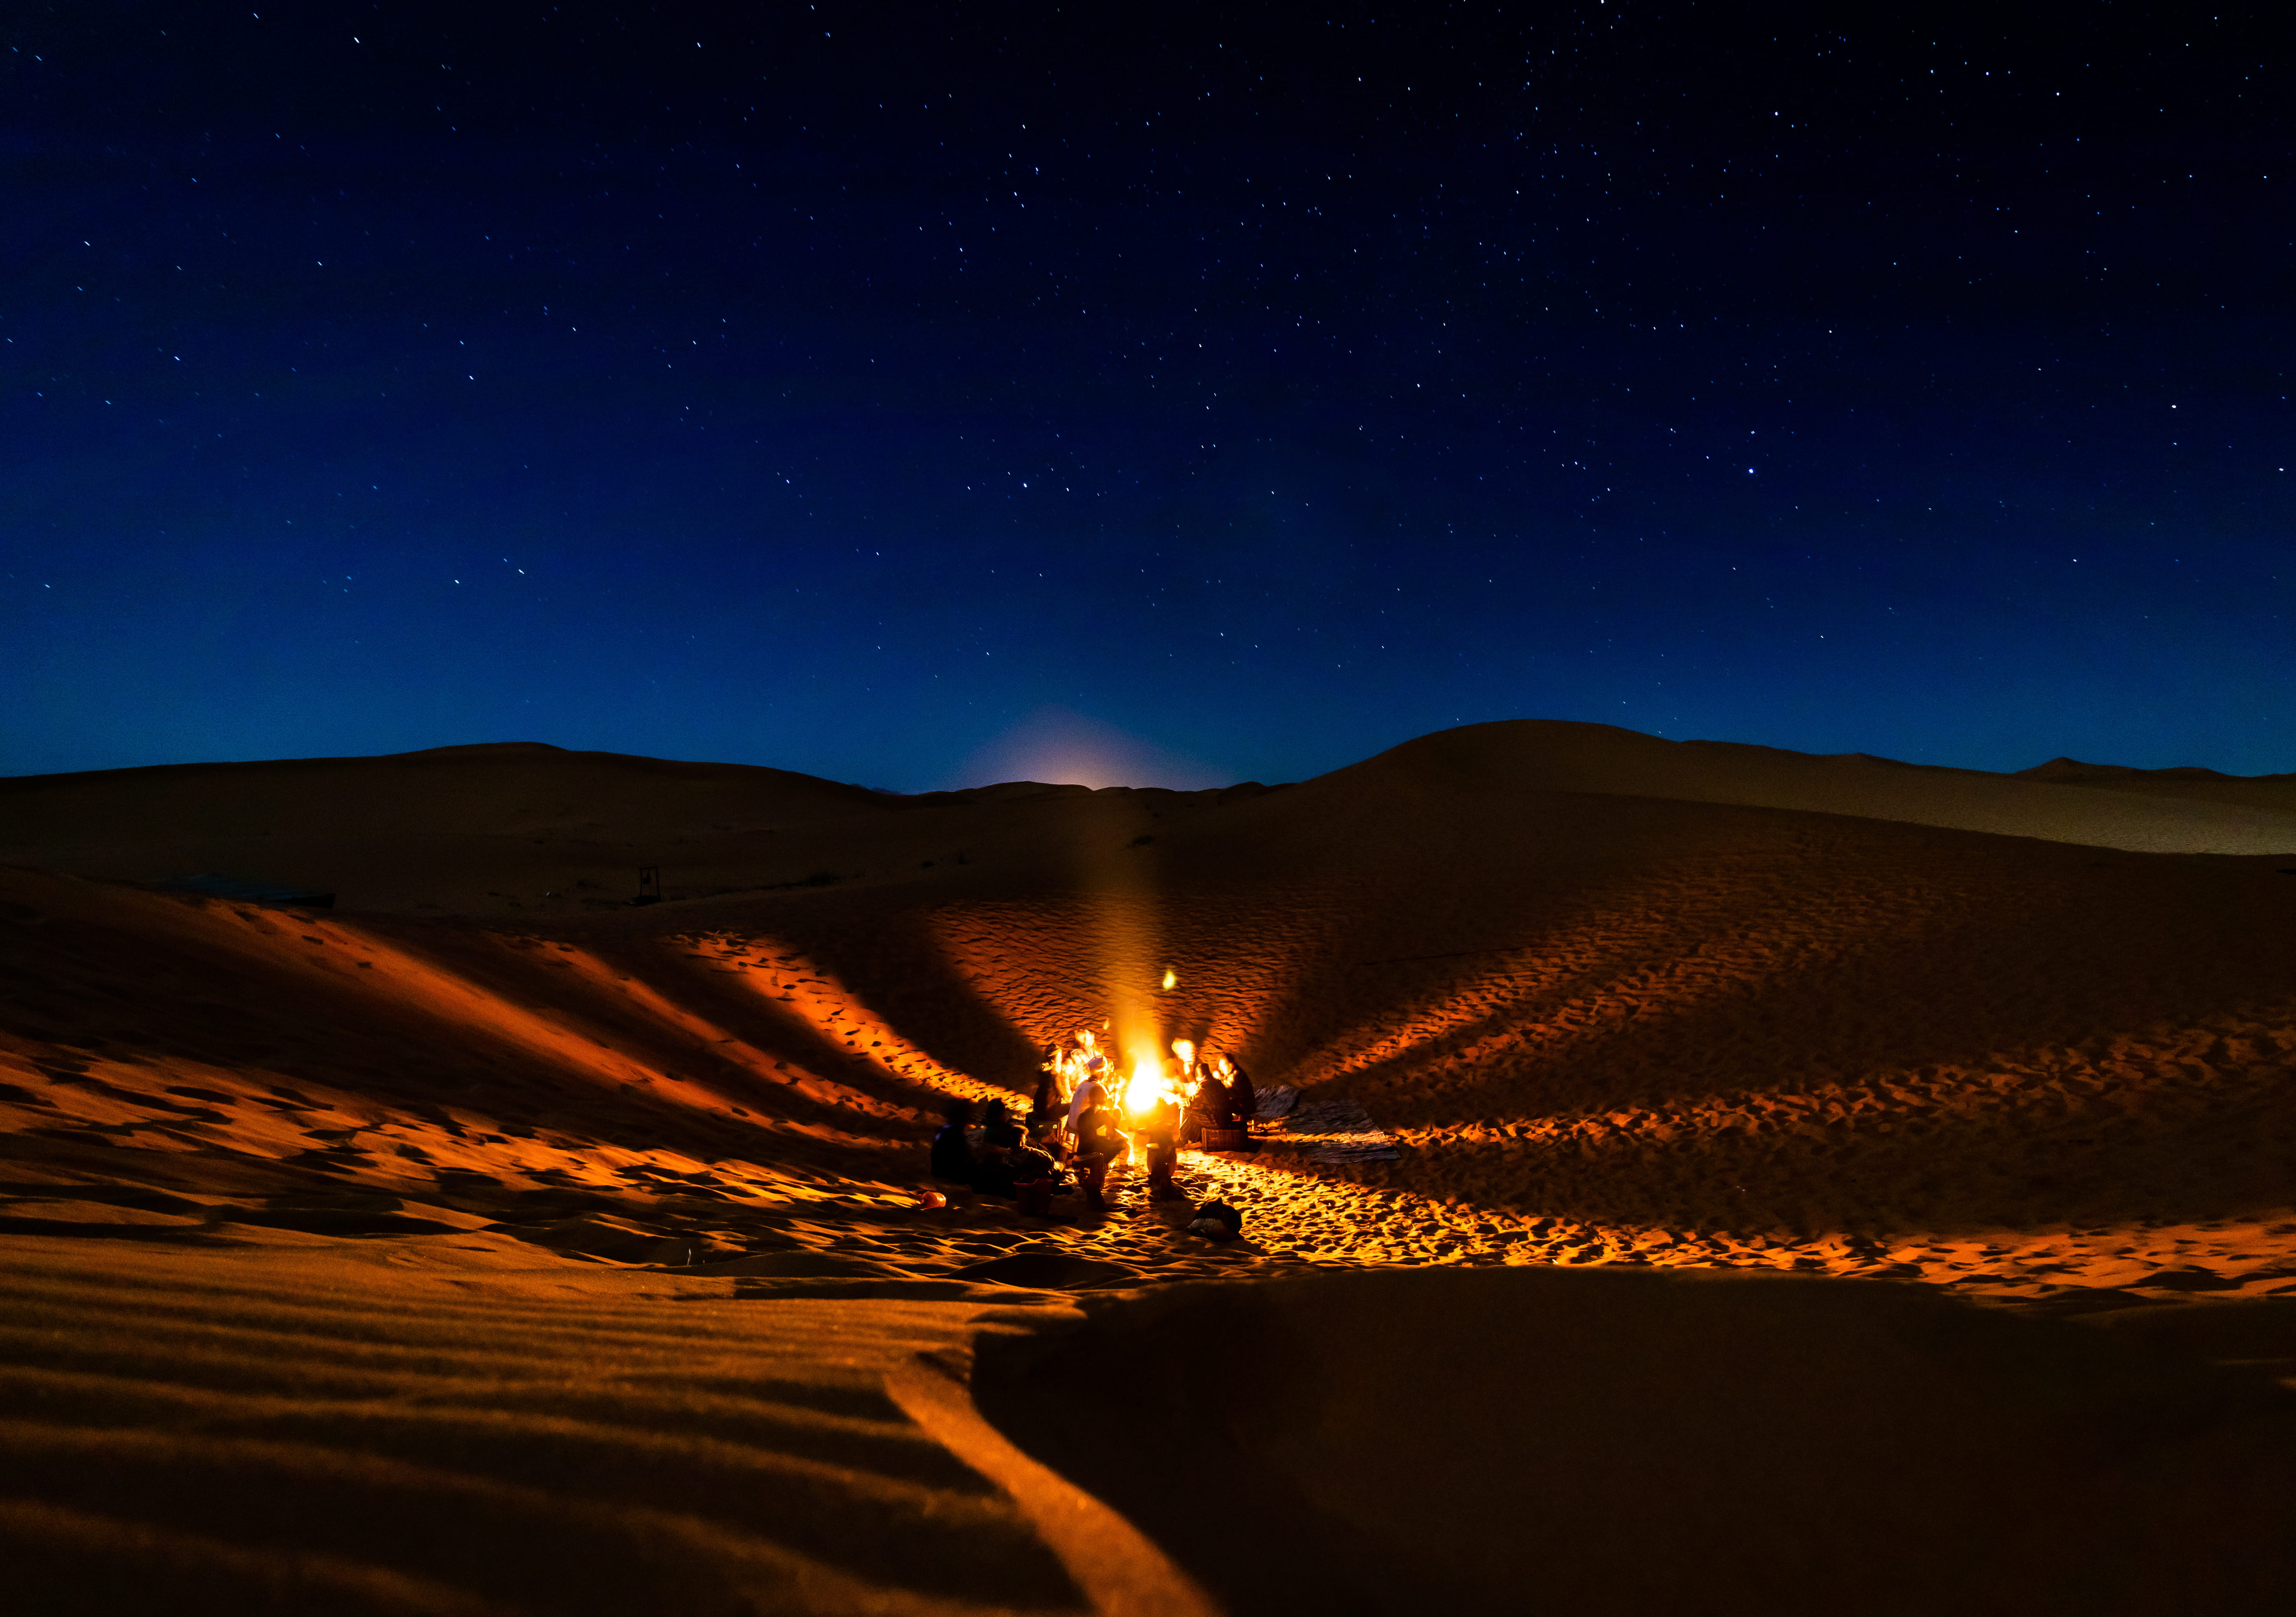 People Having Bonfire at Desert at Night, astronomy, camping